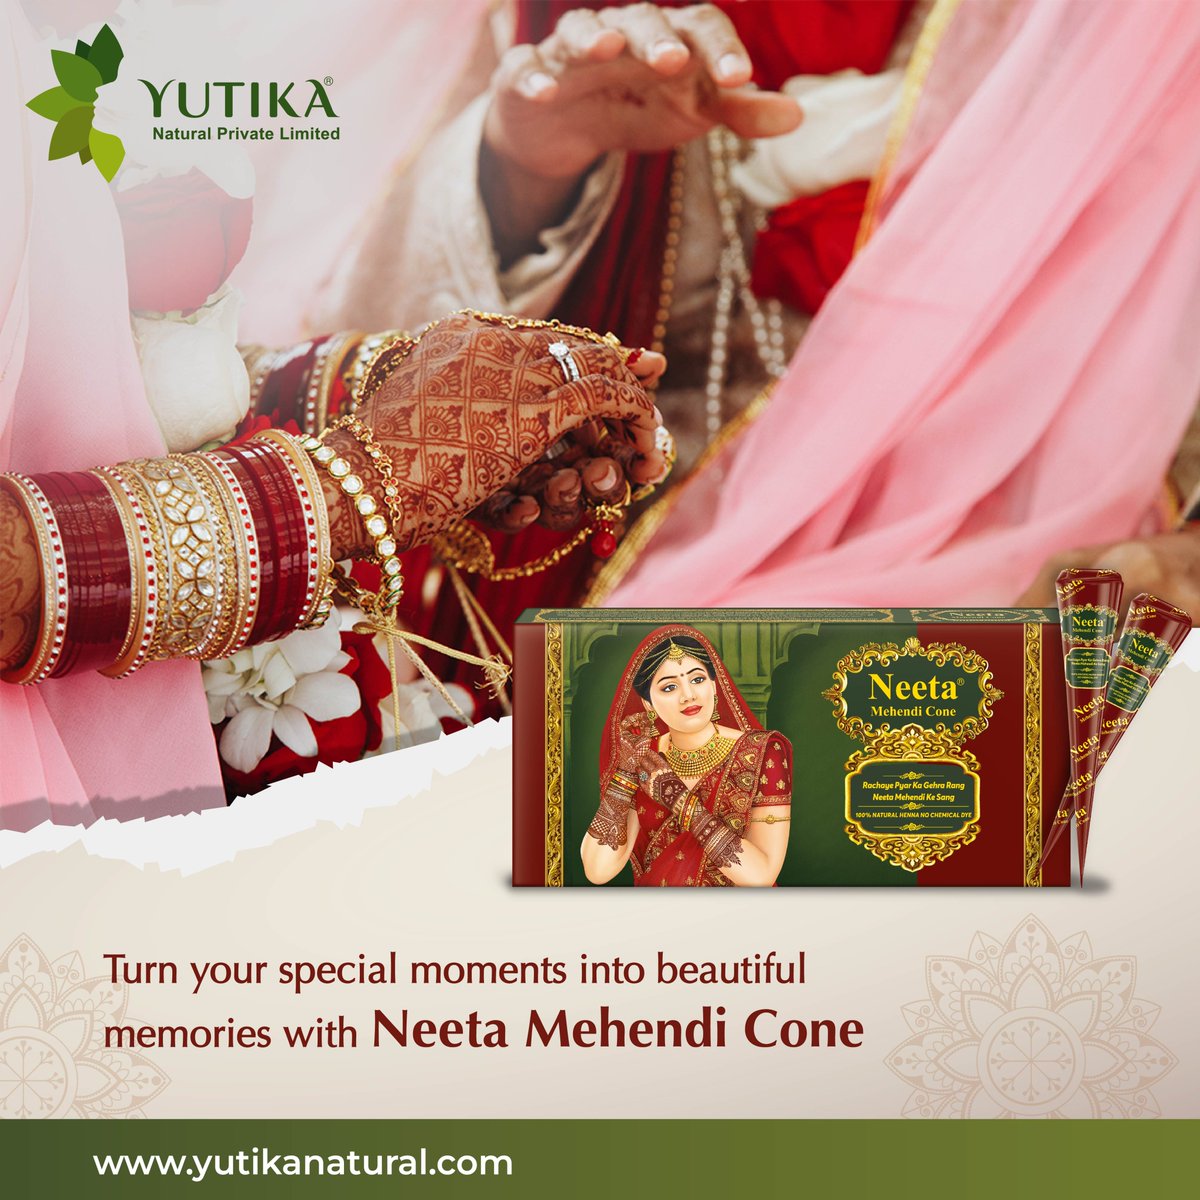 Celebrate life's precious moments with Neeta Mehendi Cone. 🫶

#neetamehendicone #yutikanatural #yutika #Neeta #festiveready #happiness #yourweddingpartner #mehndilovers #mehndibride #mehndilove #bridalmehndi #mehndidesigns #mehndiart #mehndiartist #mehndidesign #indianfestival